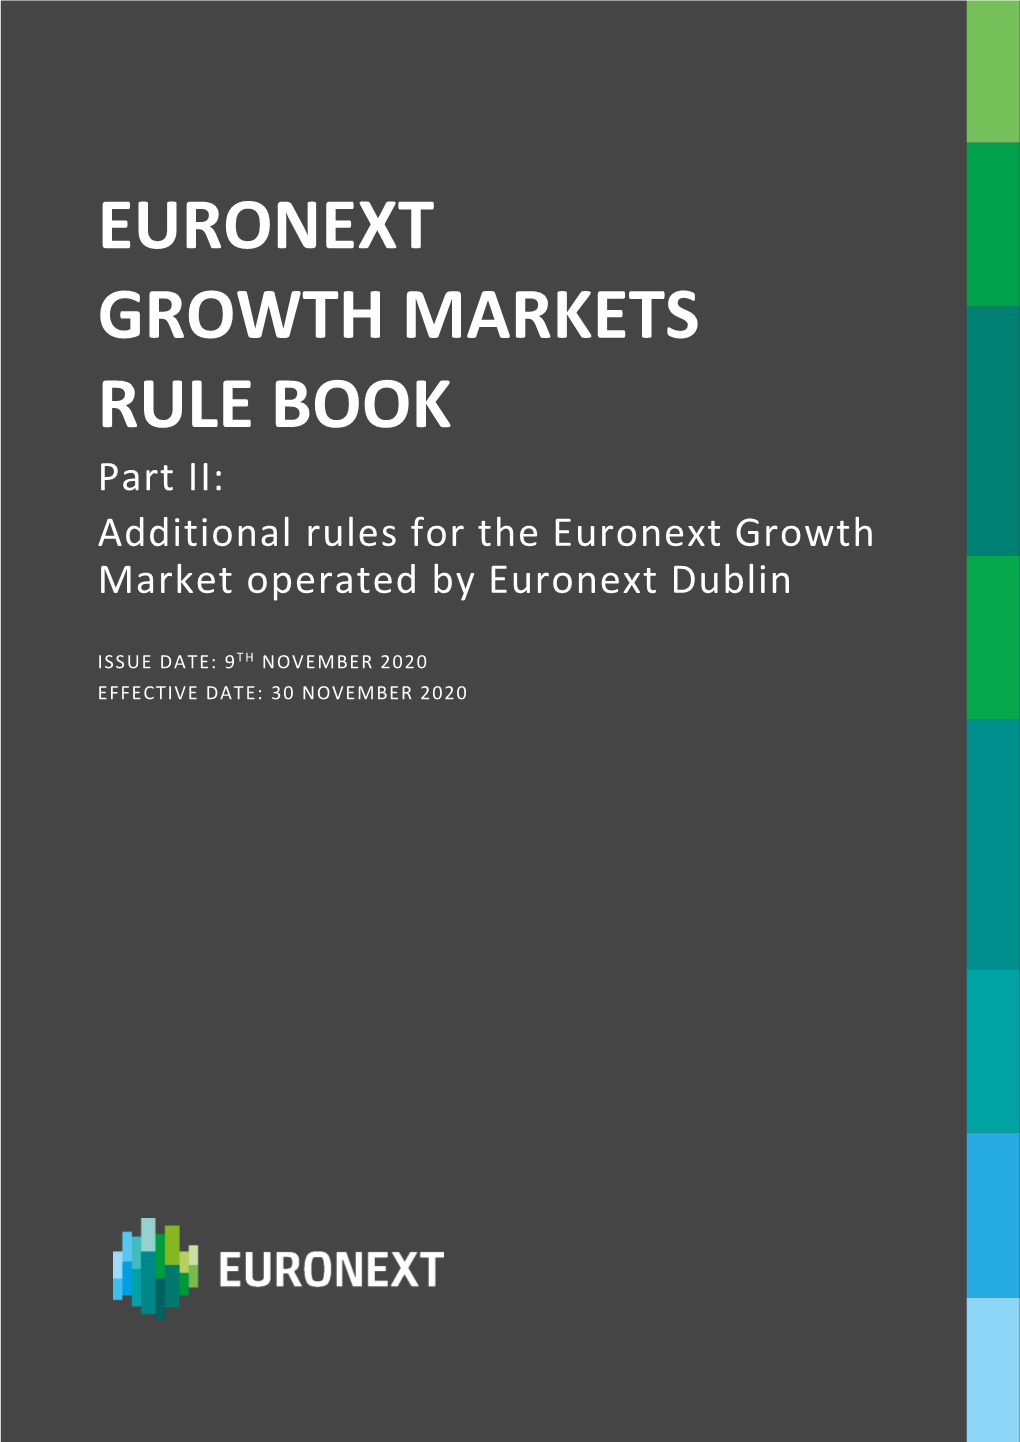 EURONEXT GROWTH MARKETS RULE BOOK Part II: Additional Rules for the Euronext Growth Market Operated by Euronext Dublin